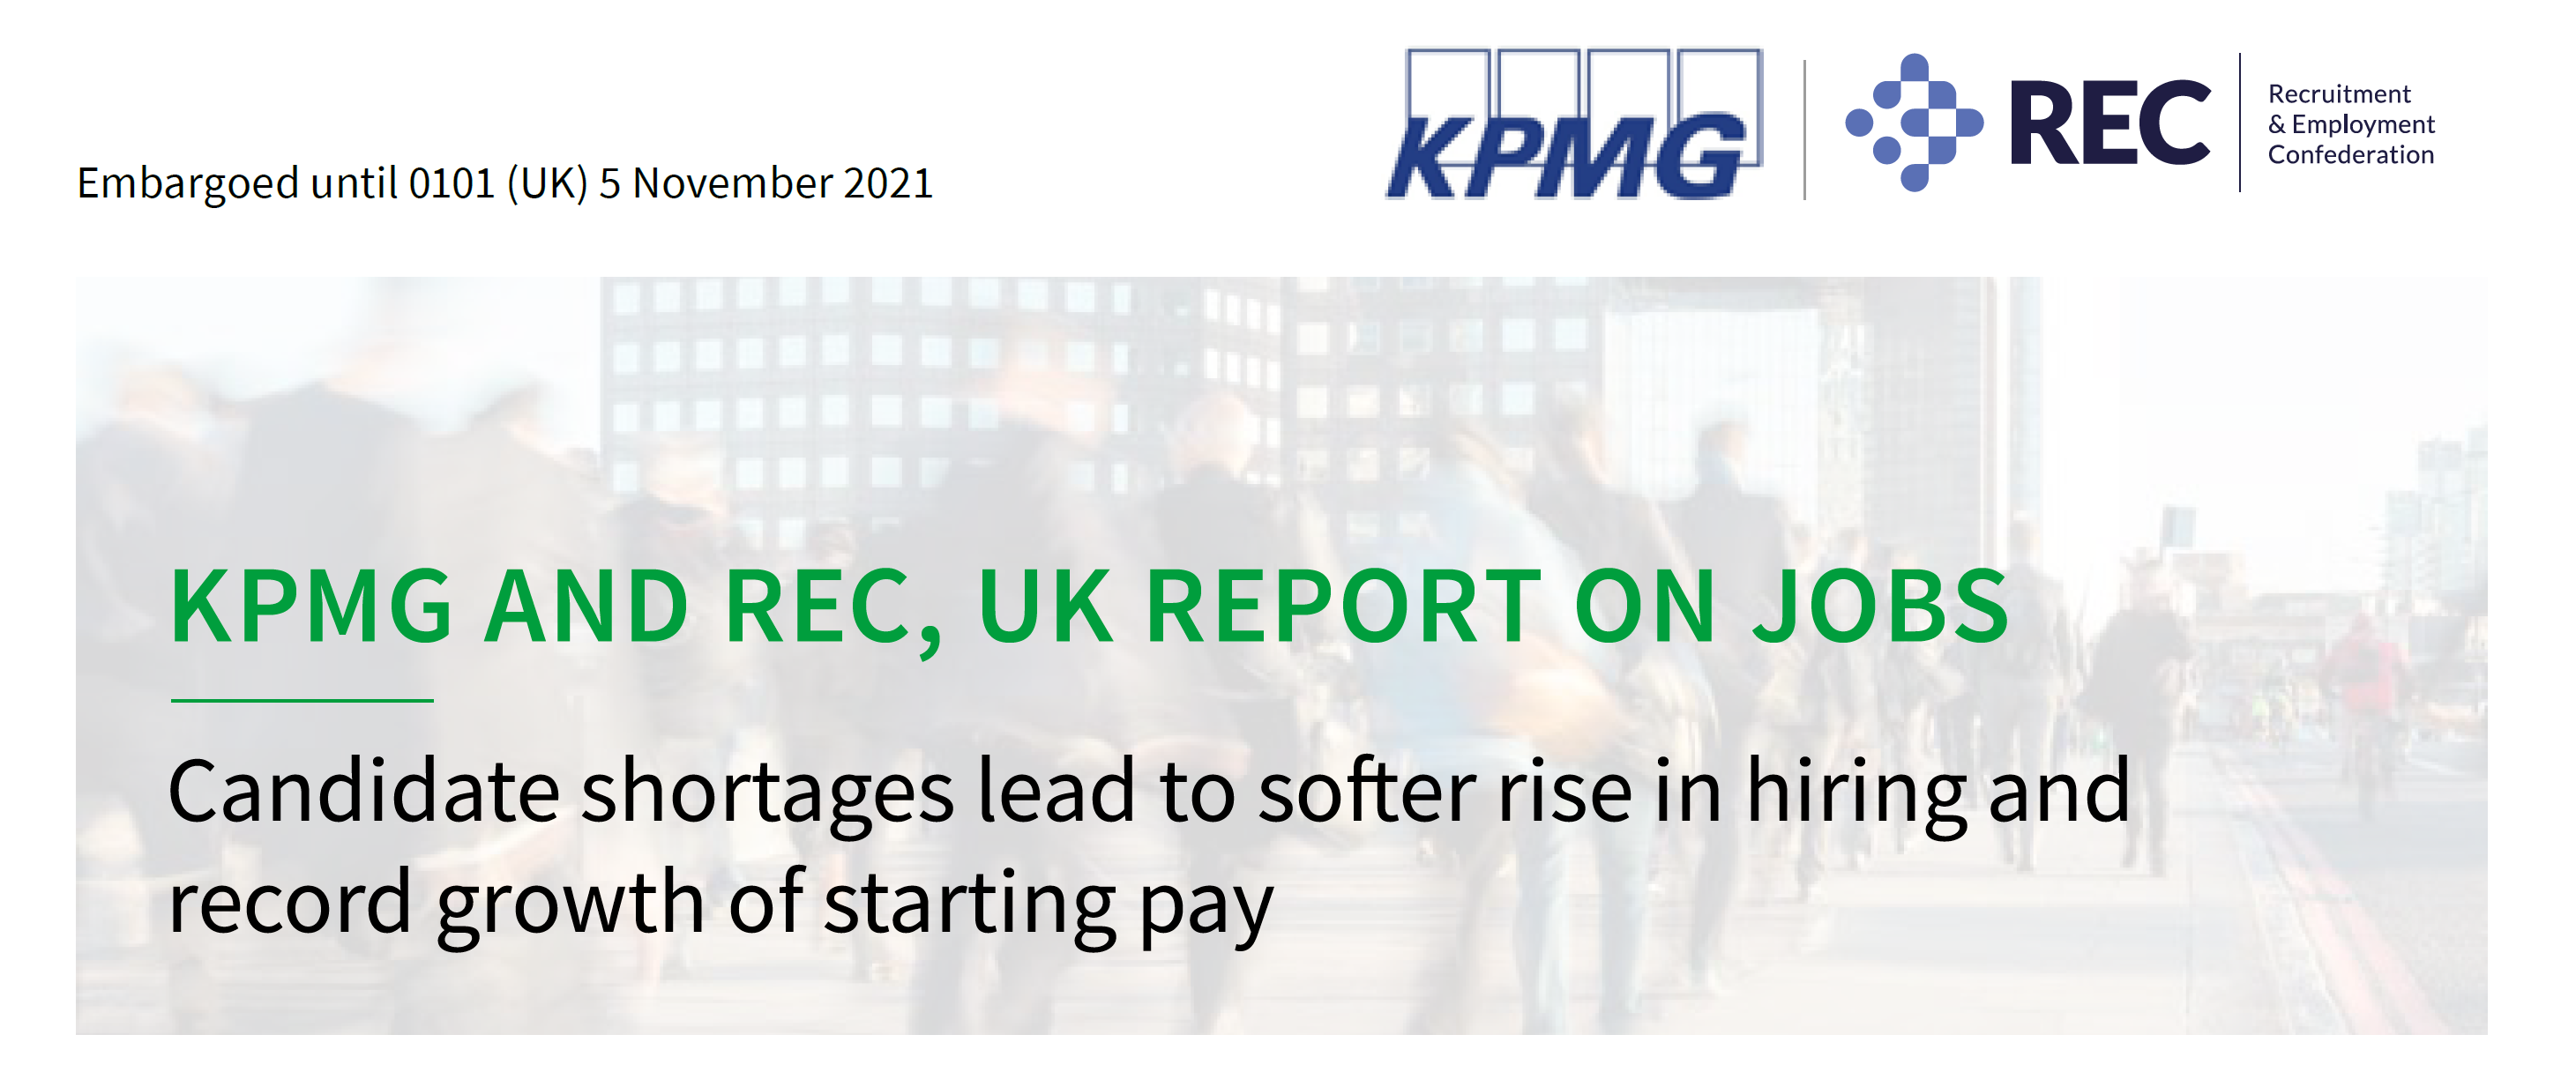 KPMG – UK Jobs Report November